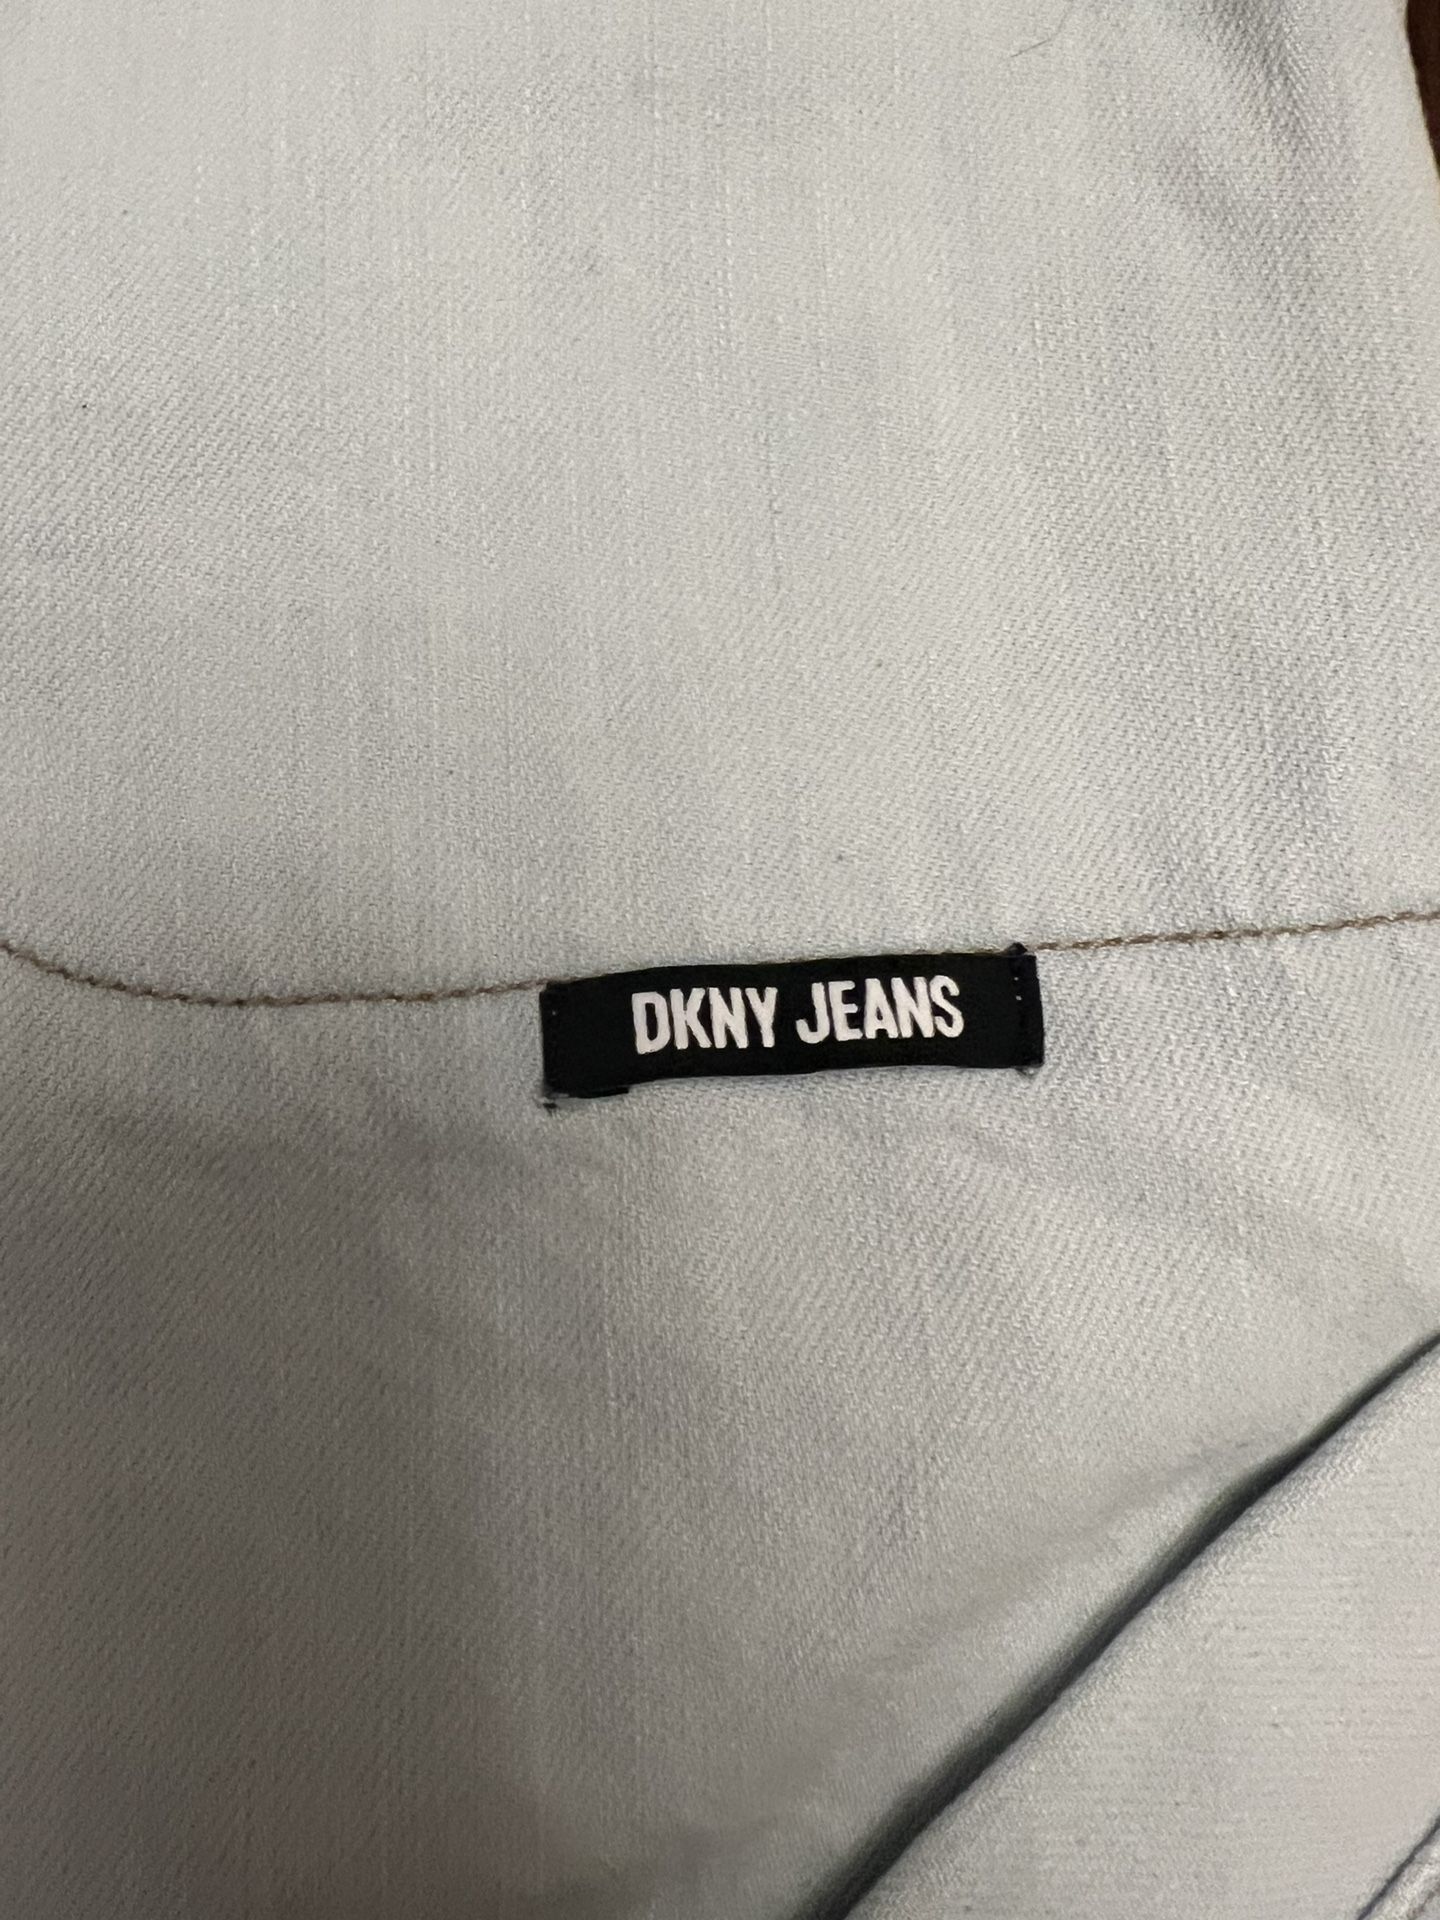 DKNY Soft Denim Jeans